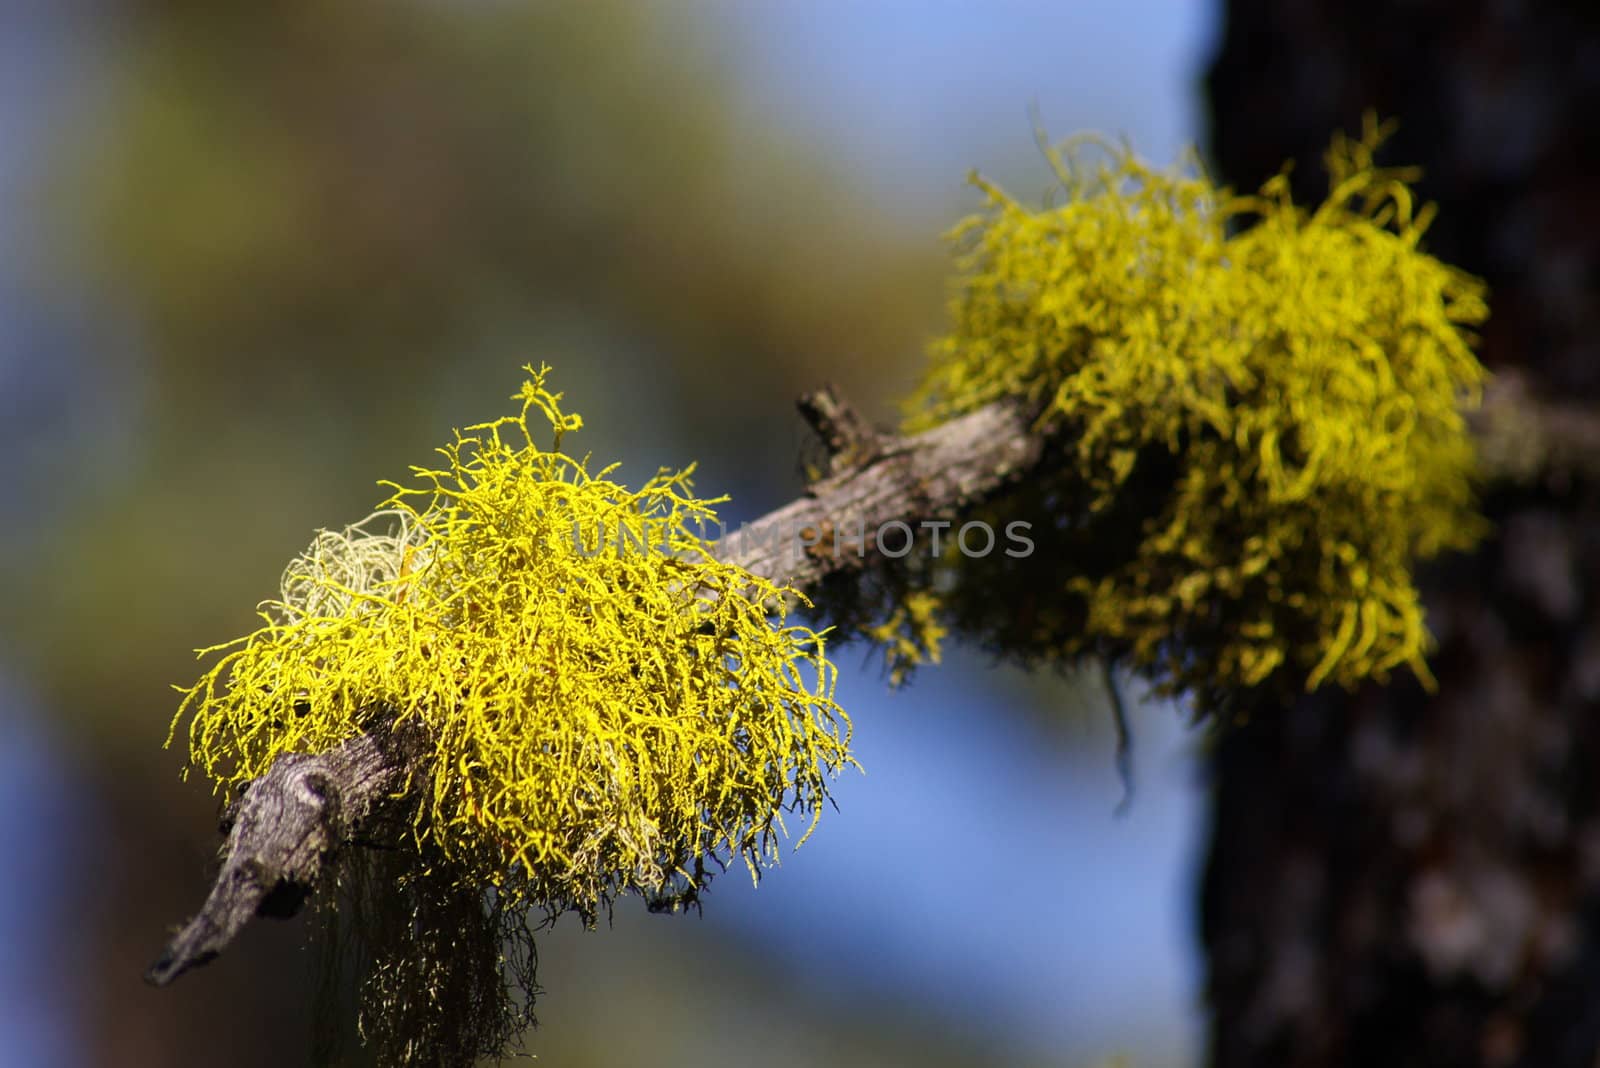 Lichens A by photocdn39